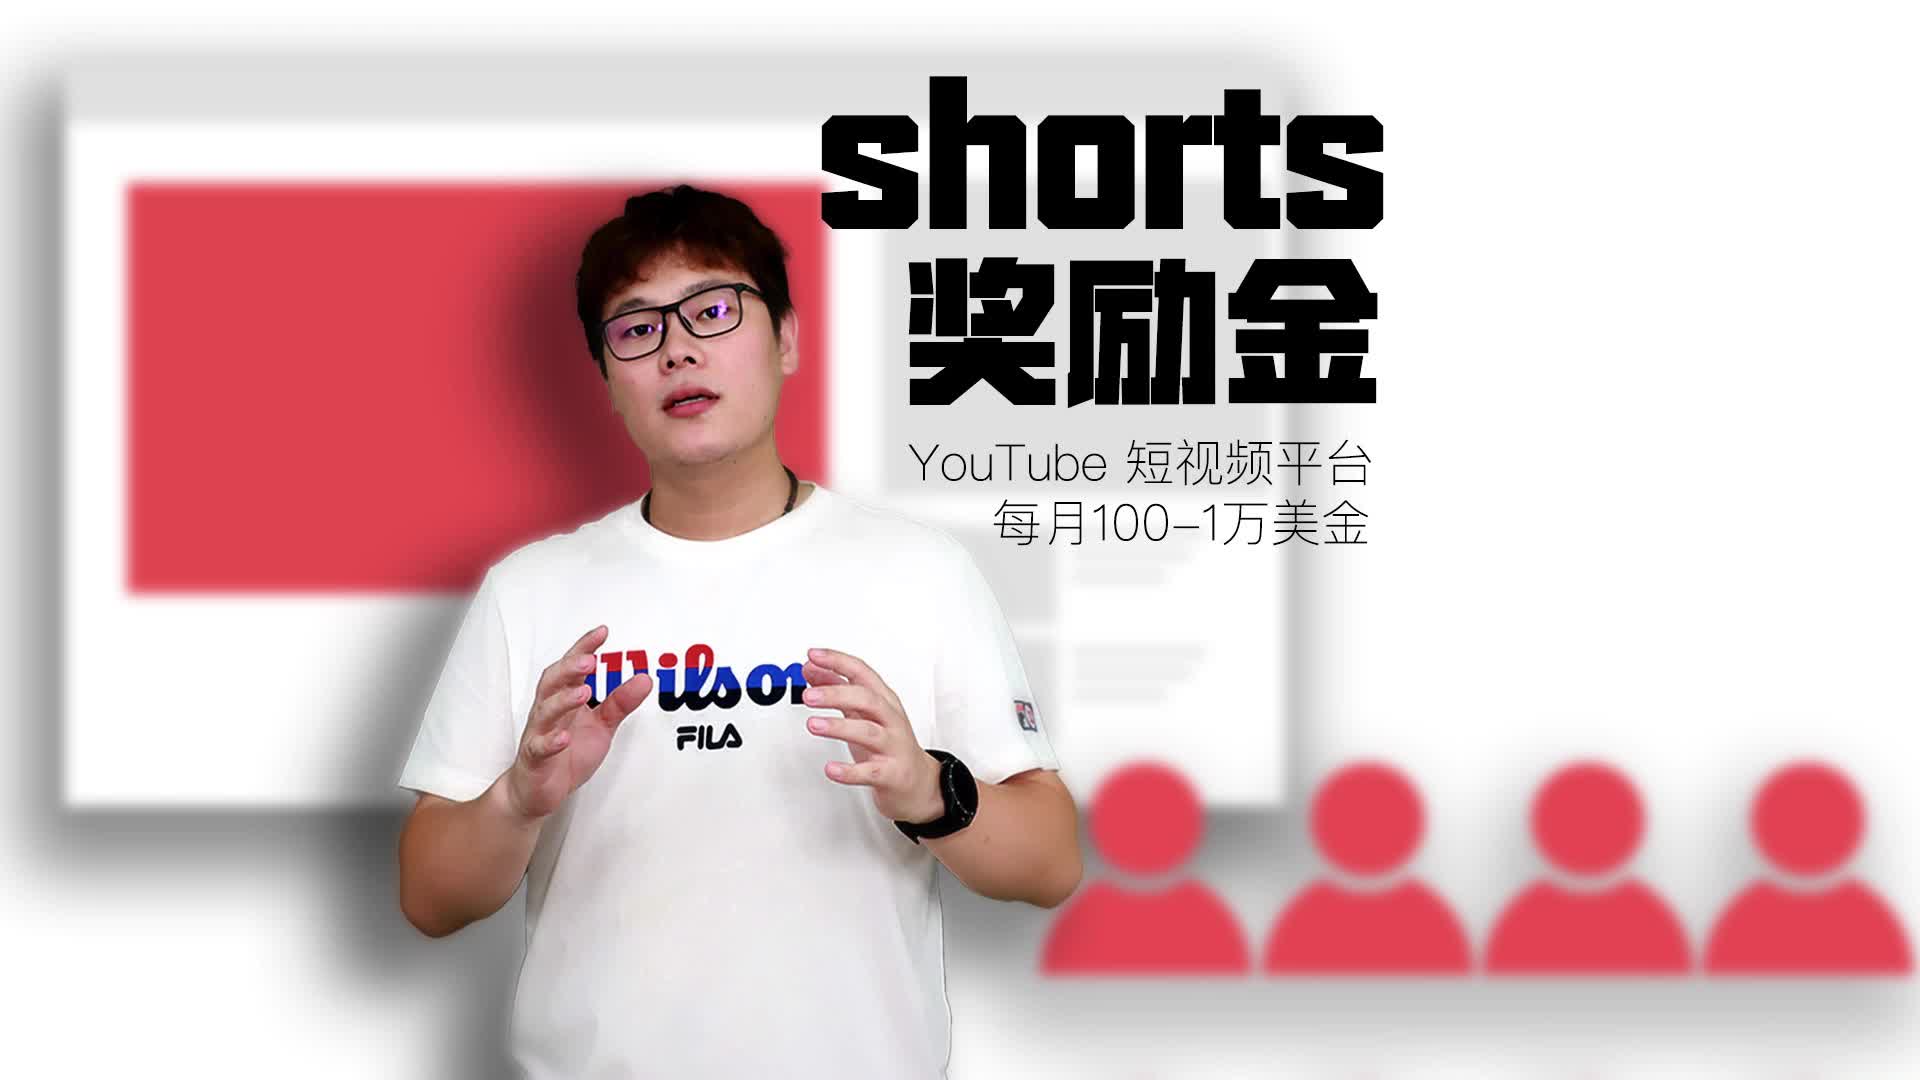 YouTube shorts 赚钱｜2021更轻量的YouTube获利项目｜立即行动起来